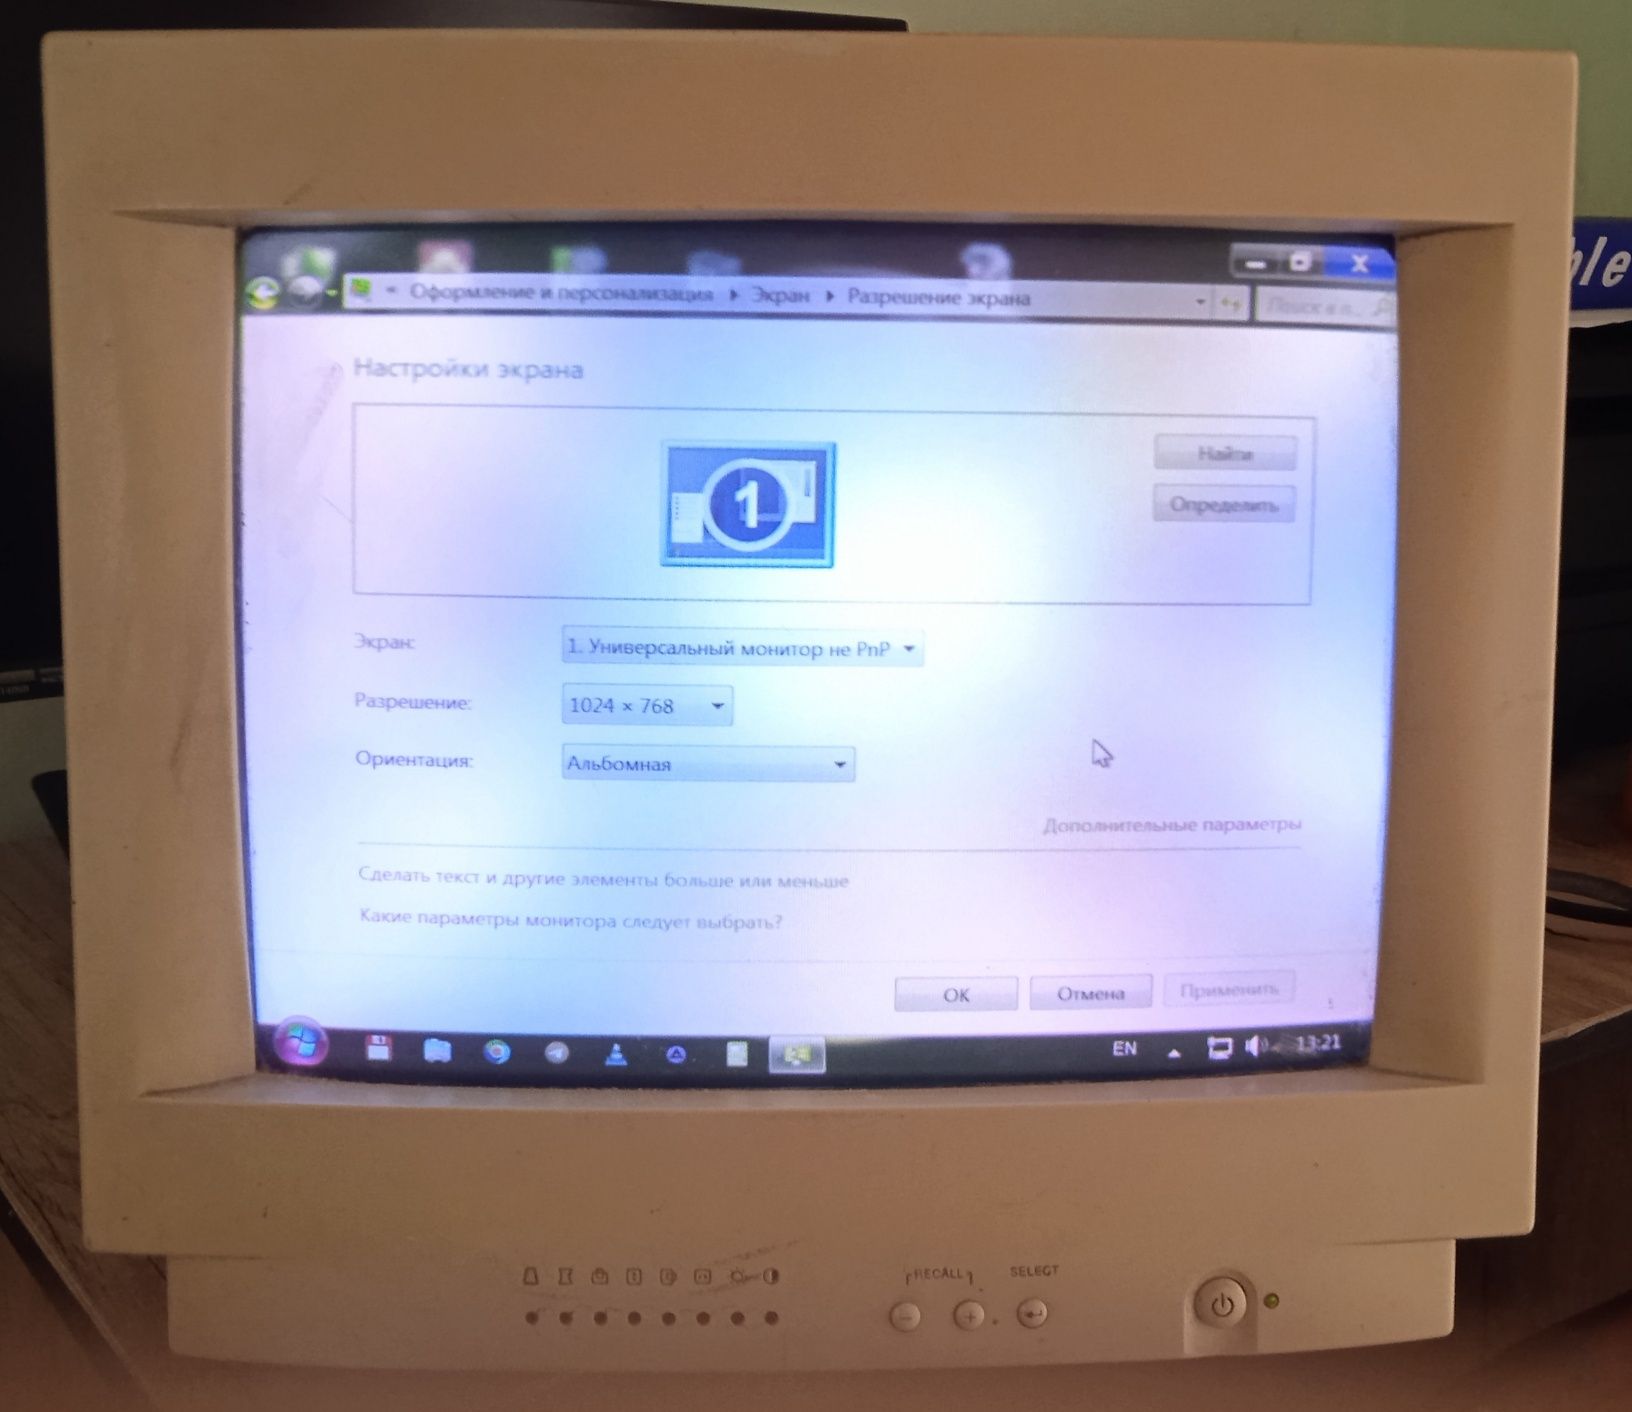 Monitor Kompyuter uchun